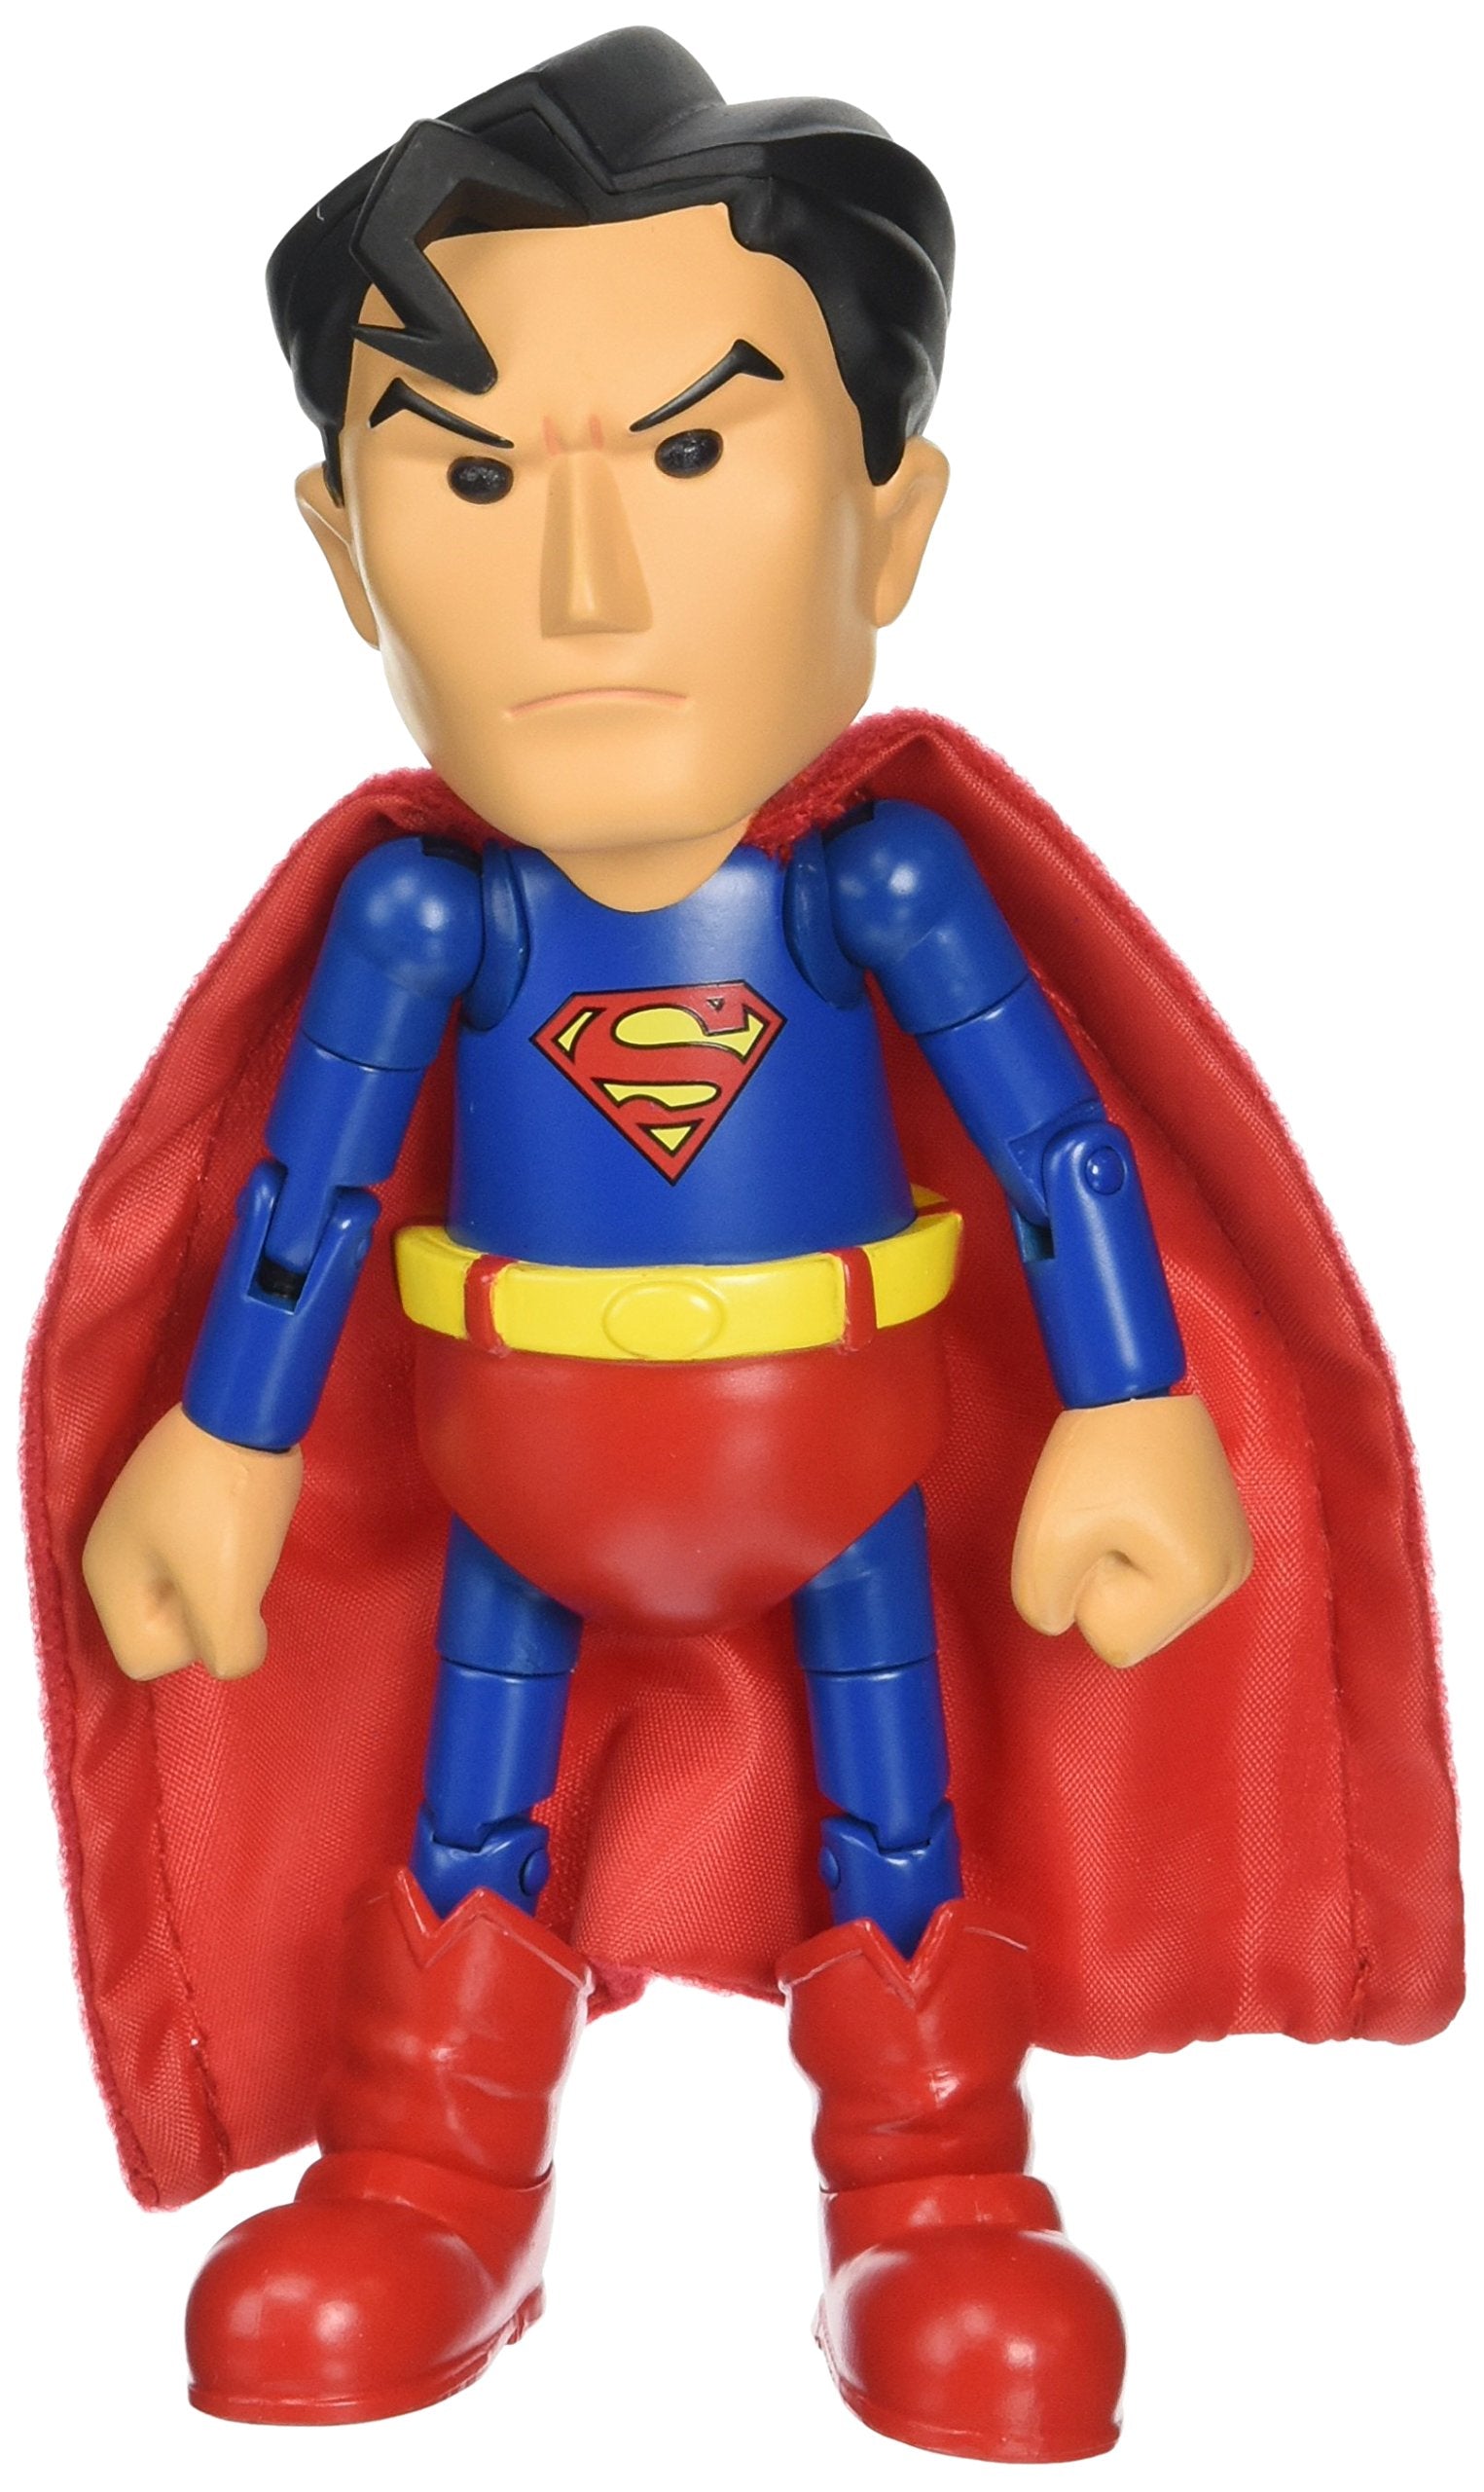 Herocross Hybrid Metal Figuration Superman "DC Comics" Action Figure